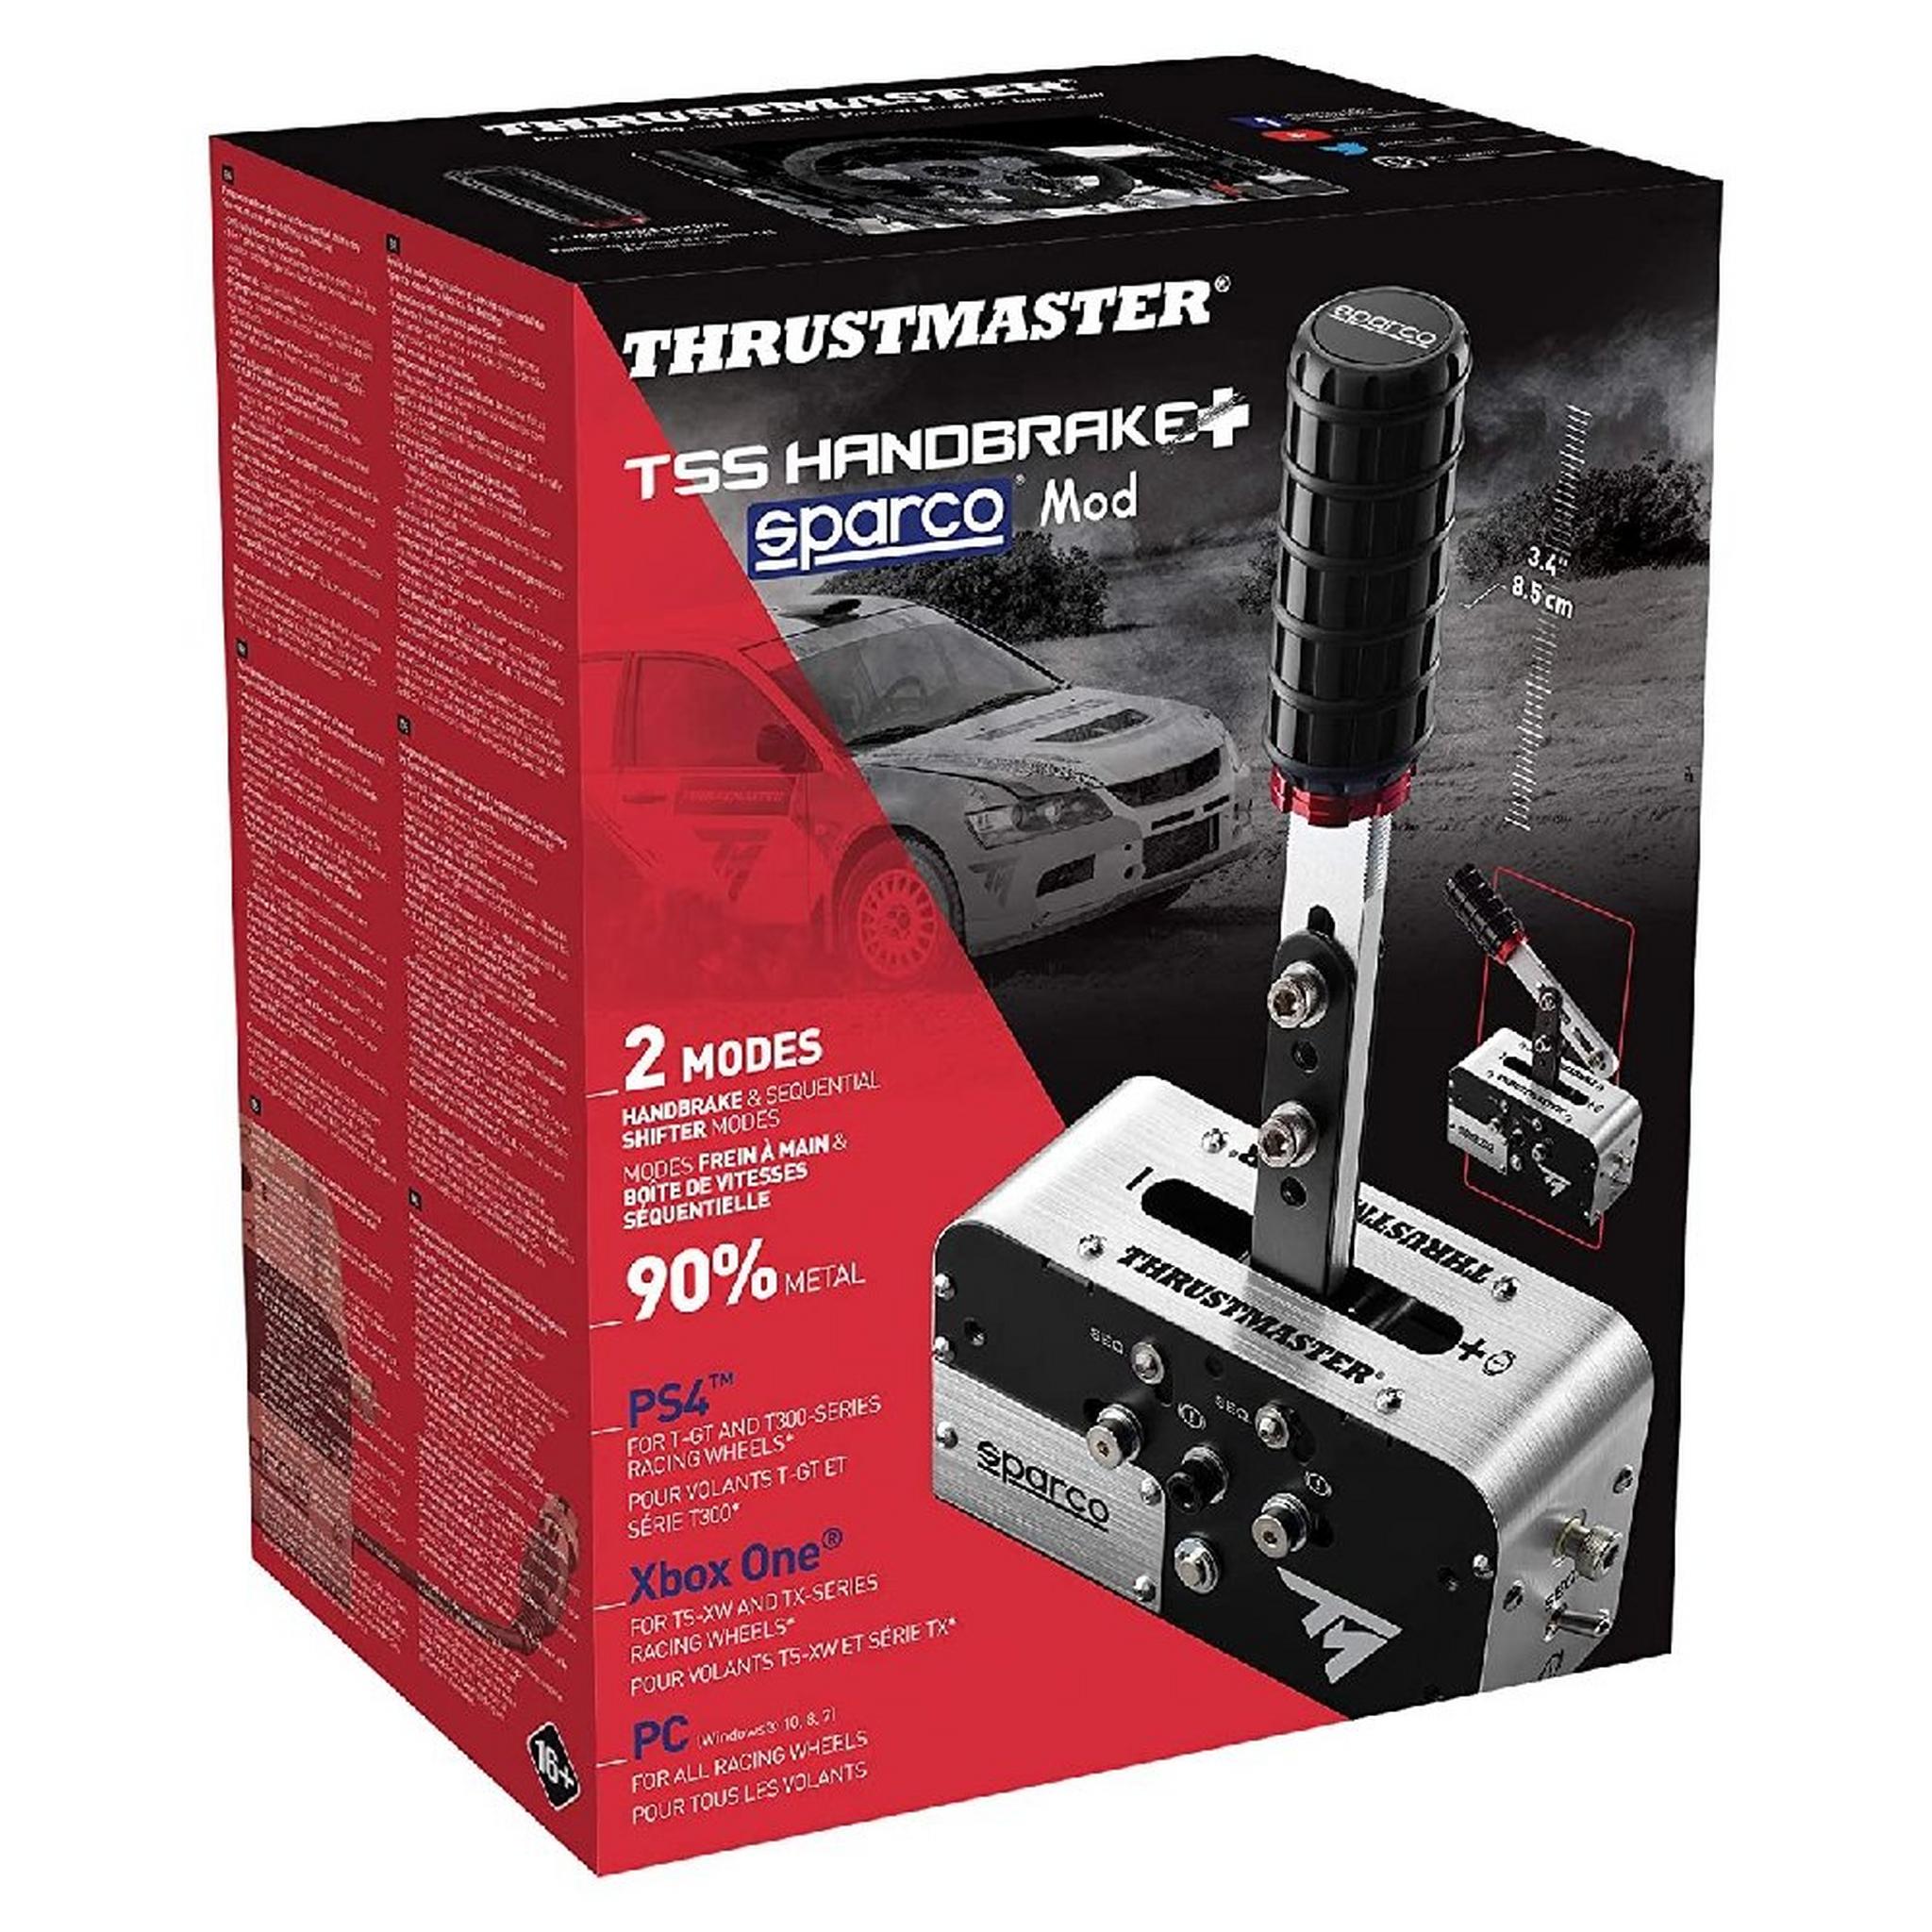 Thrustmaster TSS Handbrake Sparco Mod+ handbrake and sequential shifter for PS5 / PS4 / Xbox One / PC, TM-SPARCOHANDBRAKE